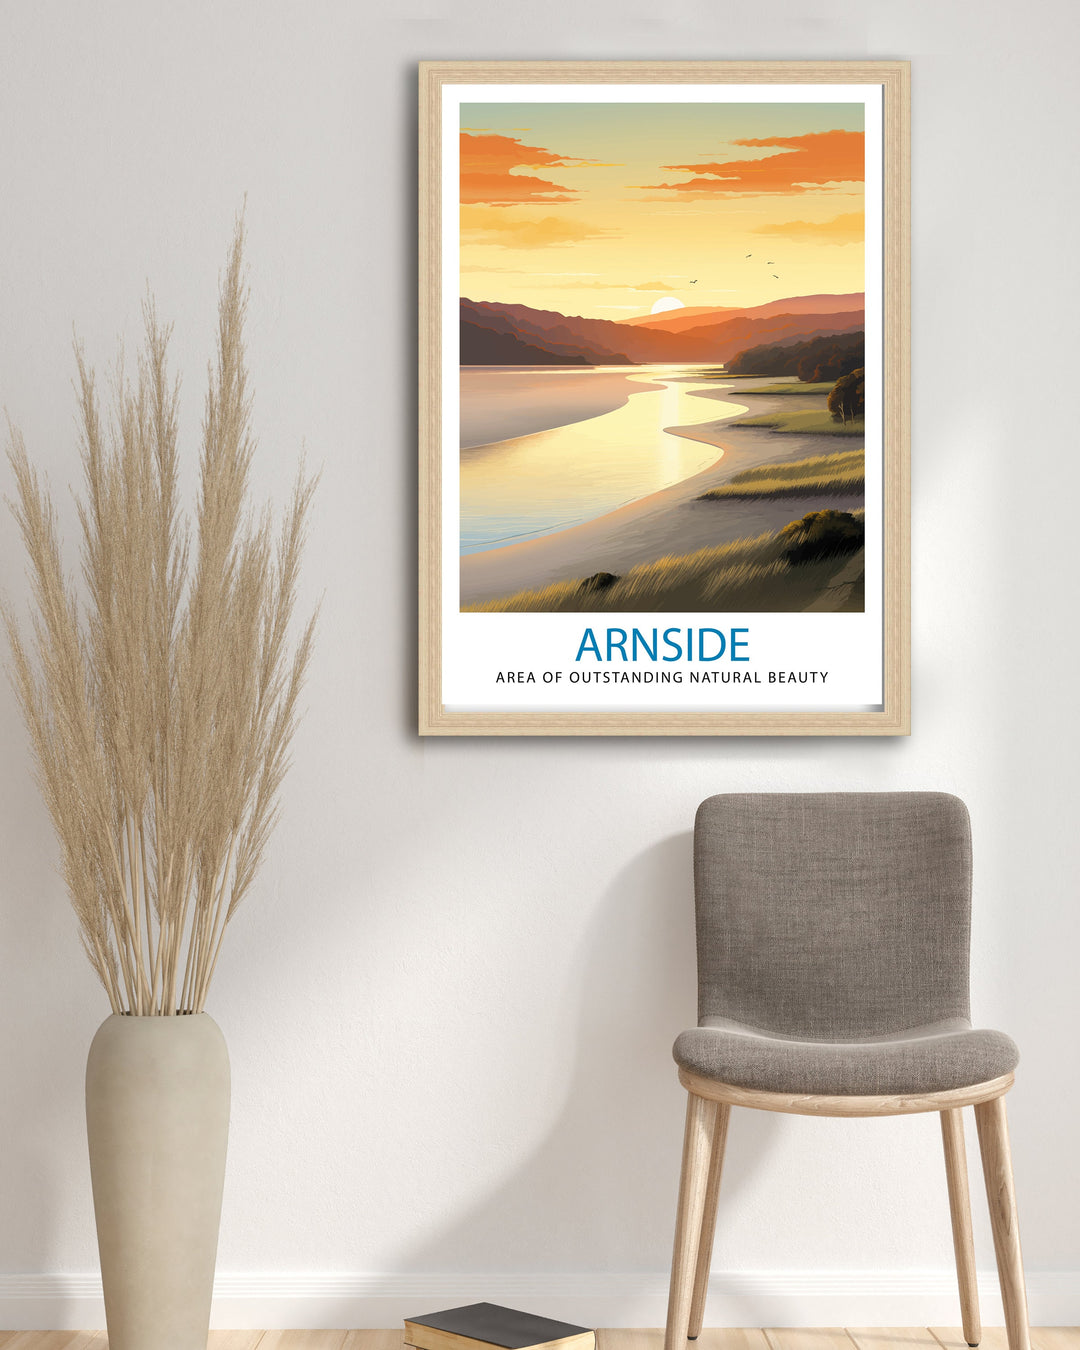 Arnside AONB Print Area of Outstanding Natural Beauty Art Arnside Knott Poster Cumbria Coastline Wall Decor UK Nature Reserve Artwork